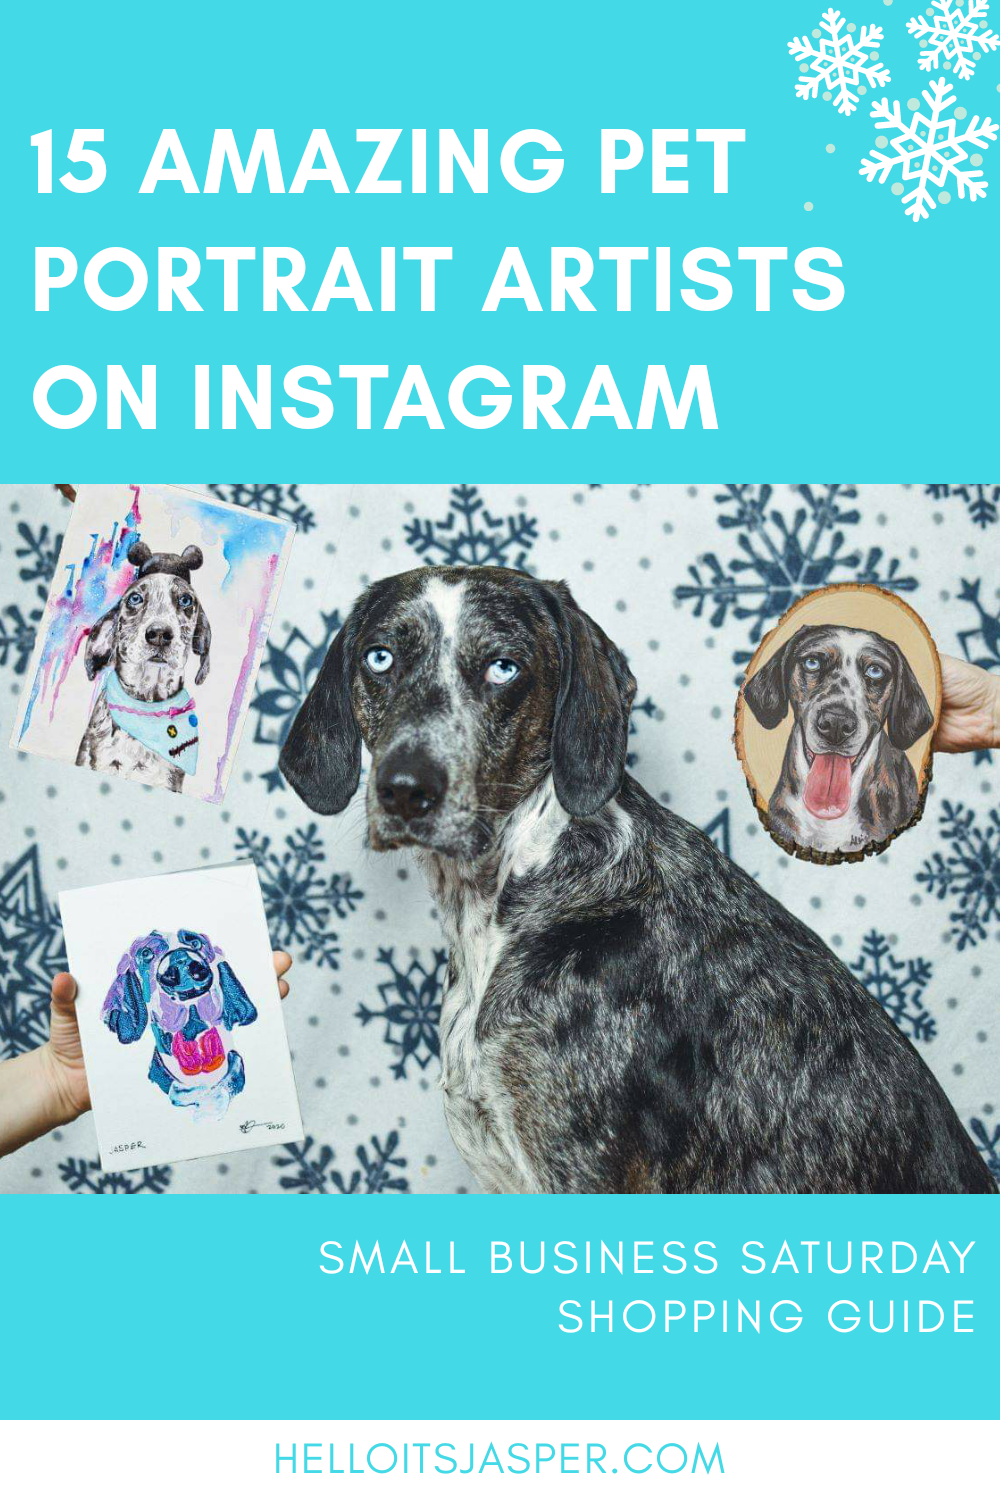 15 Amazing Pet Portrait Artists on Instagram